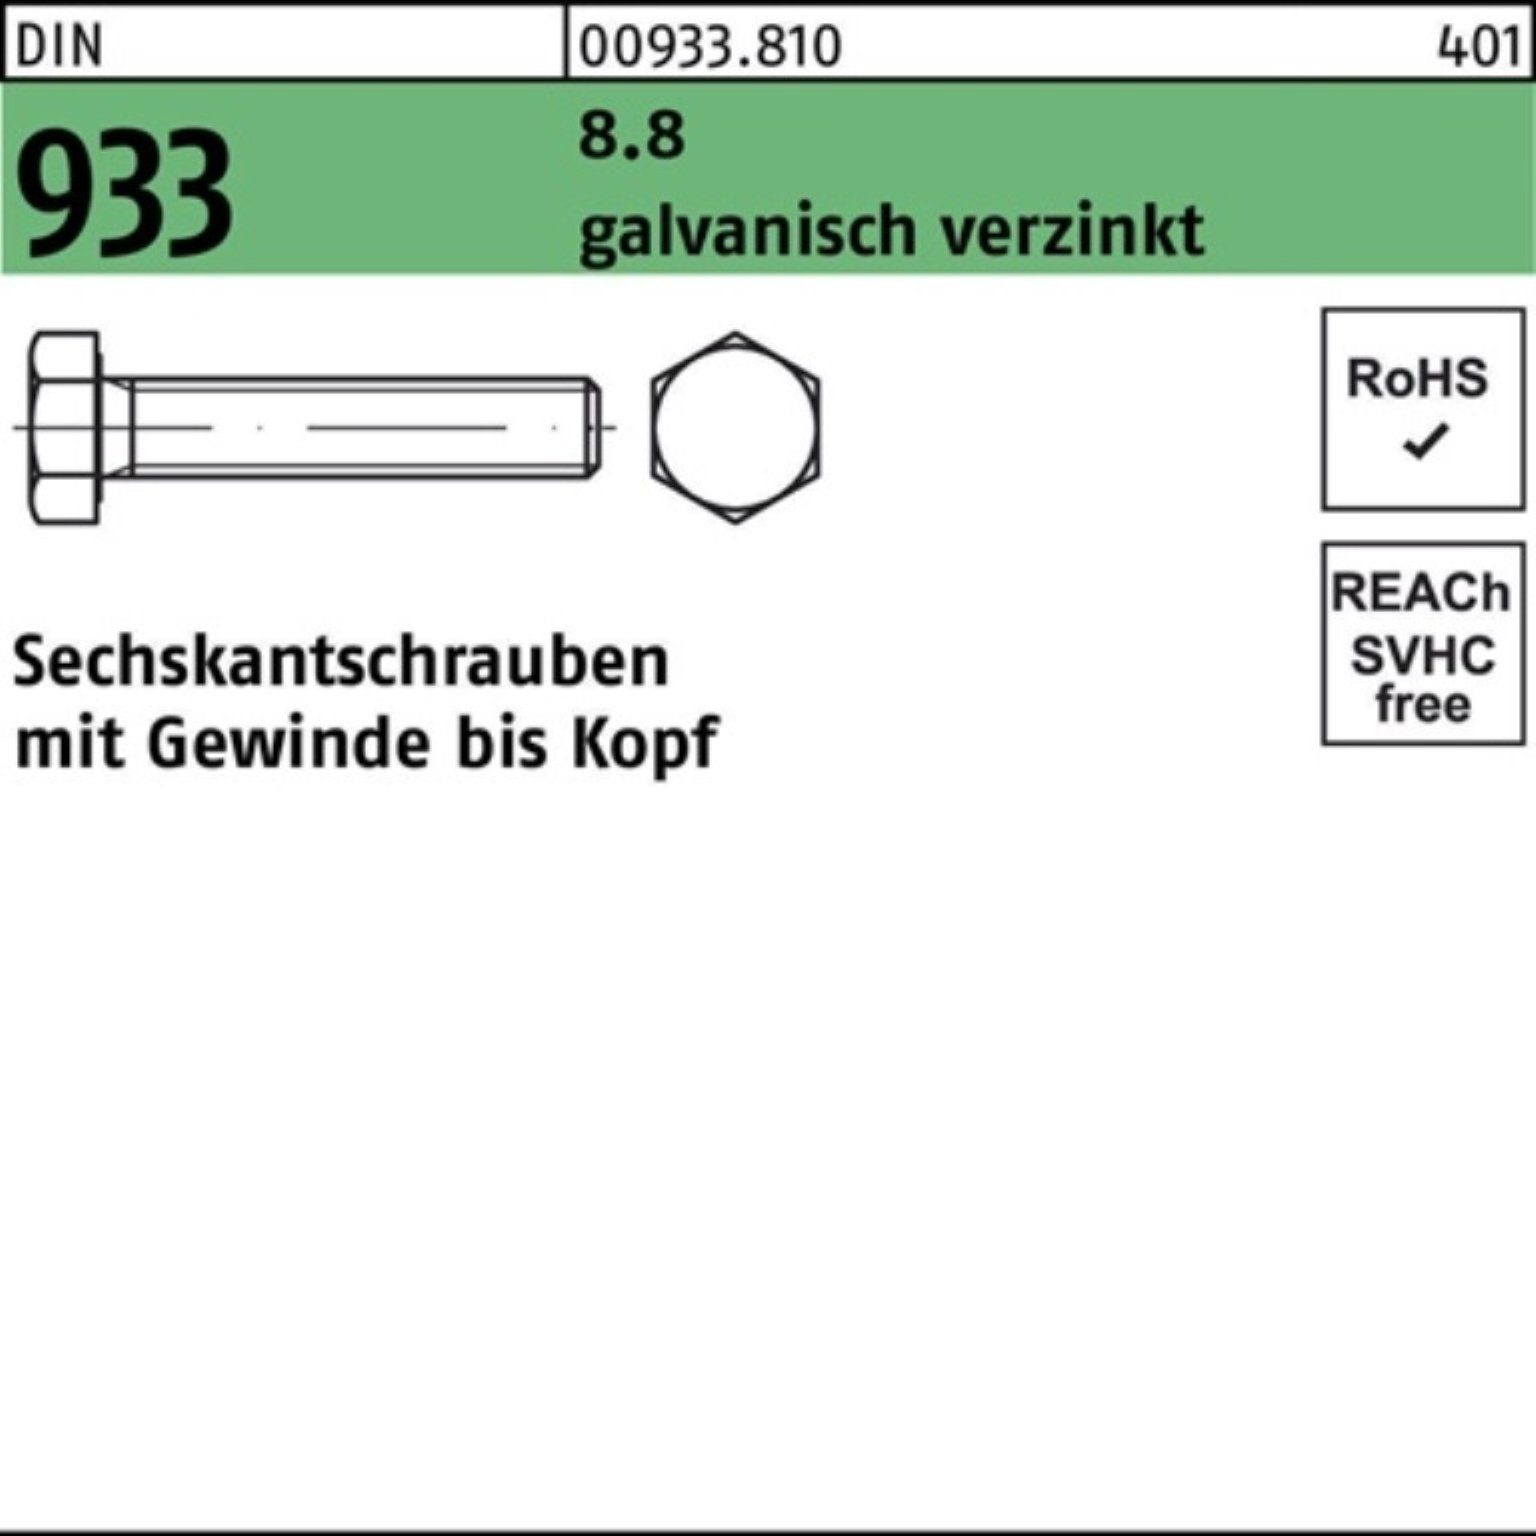 Reyher Sechskantschraube 100er Sechskantschraube VG 8.8 galv.verz. St 933 100 M8x Pack 130 DIN